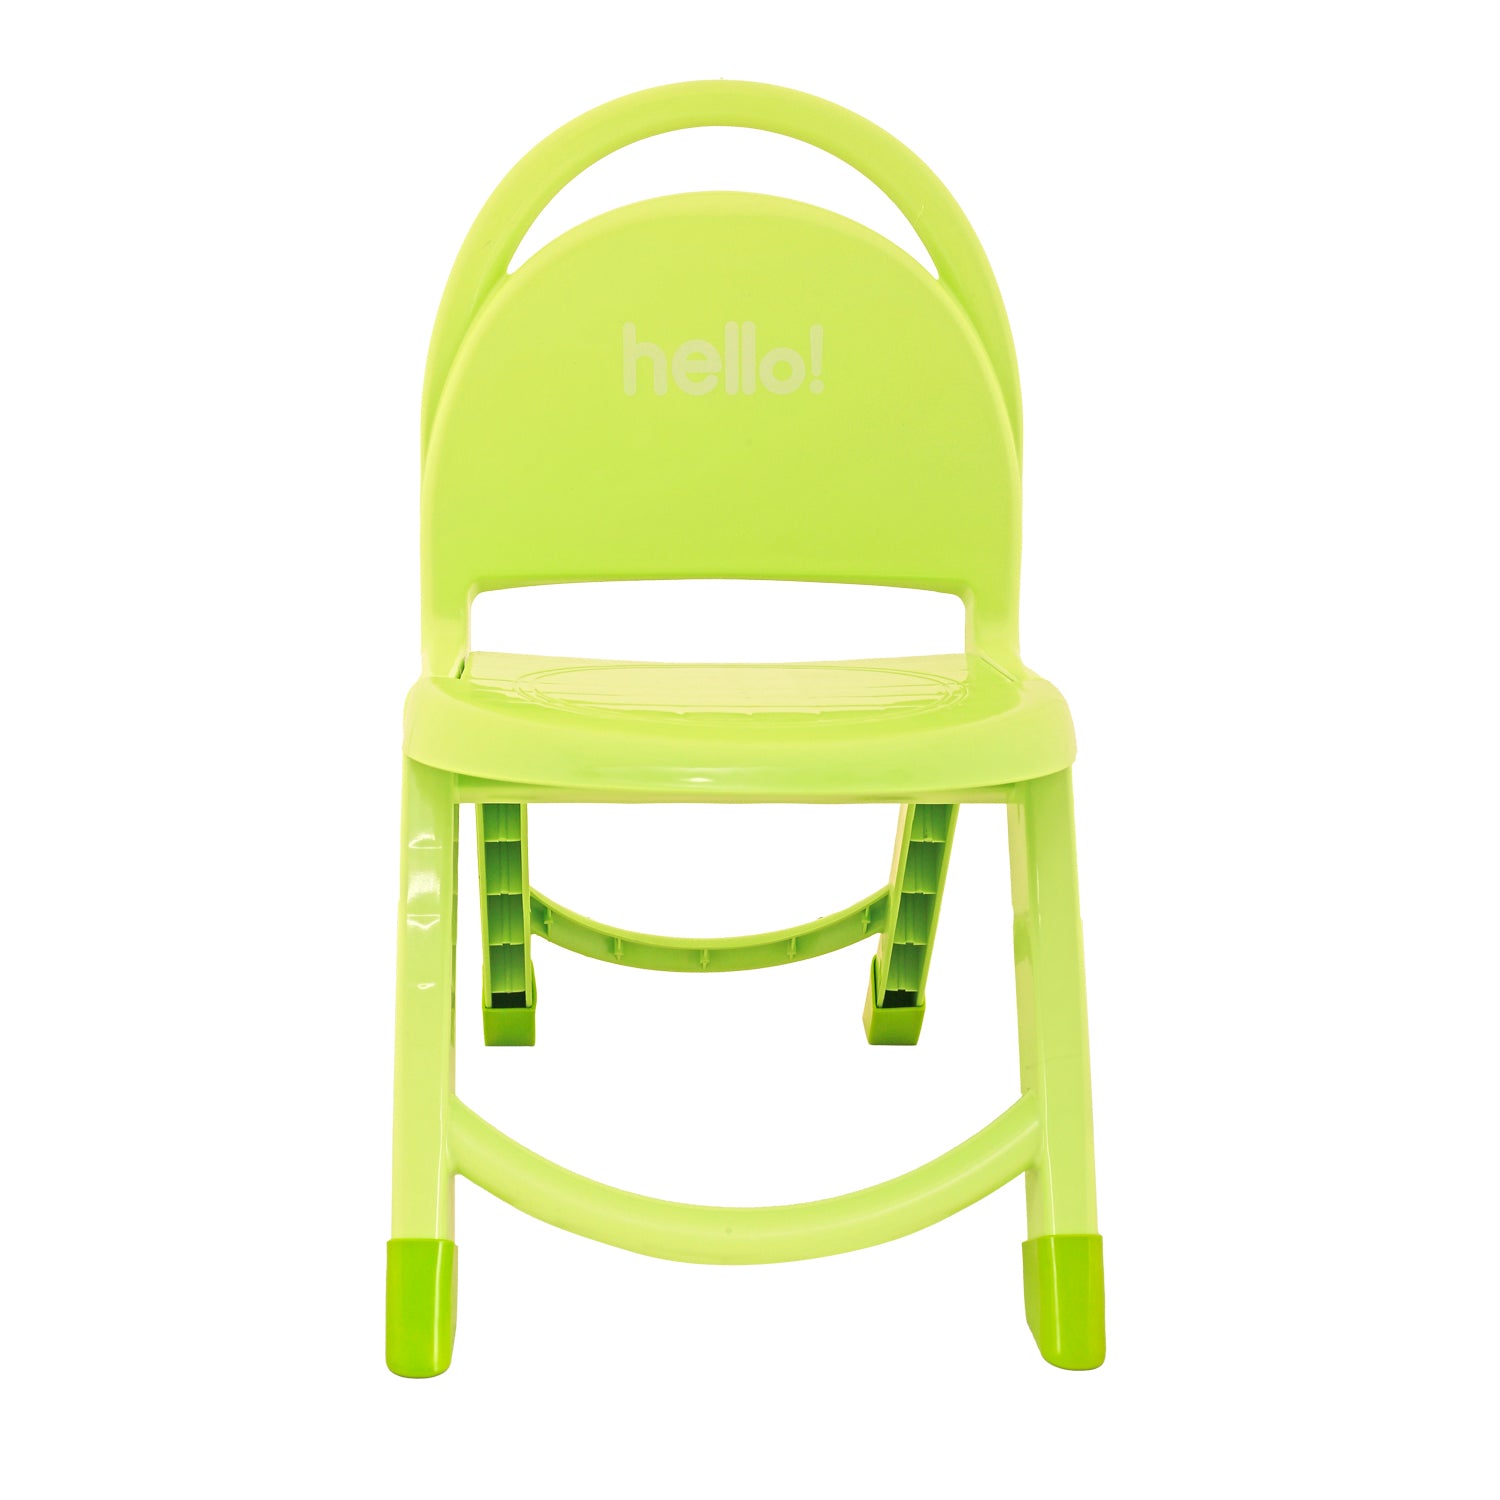 Foldable Multipurpose Green Chair